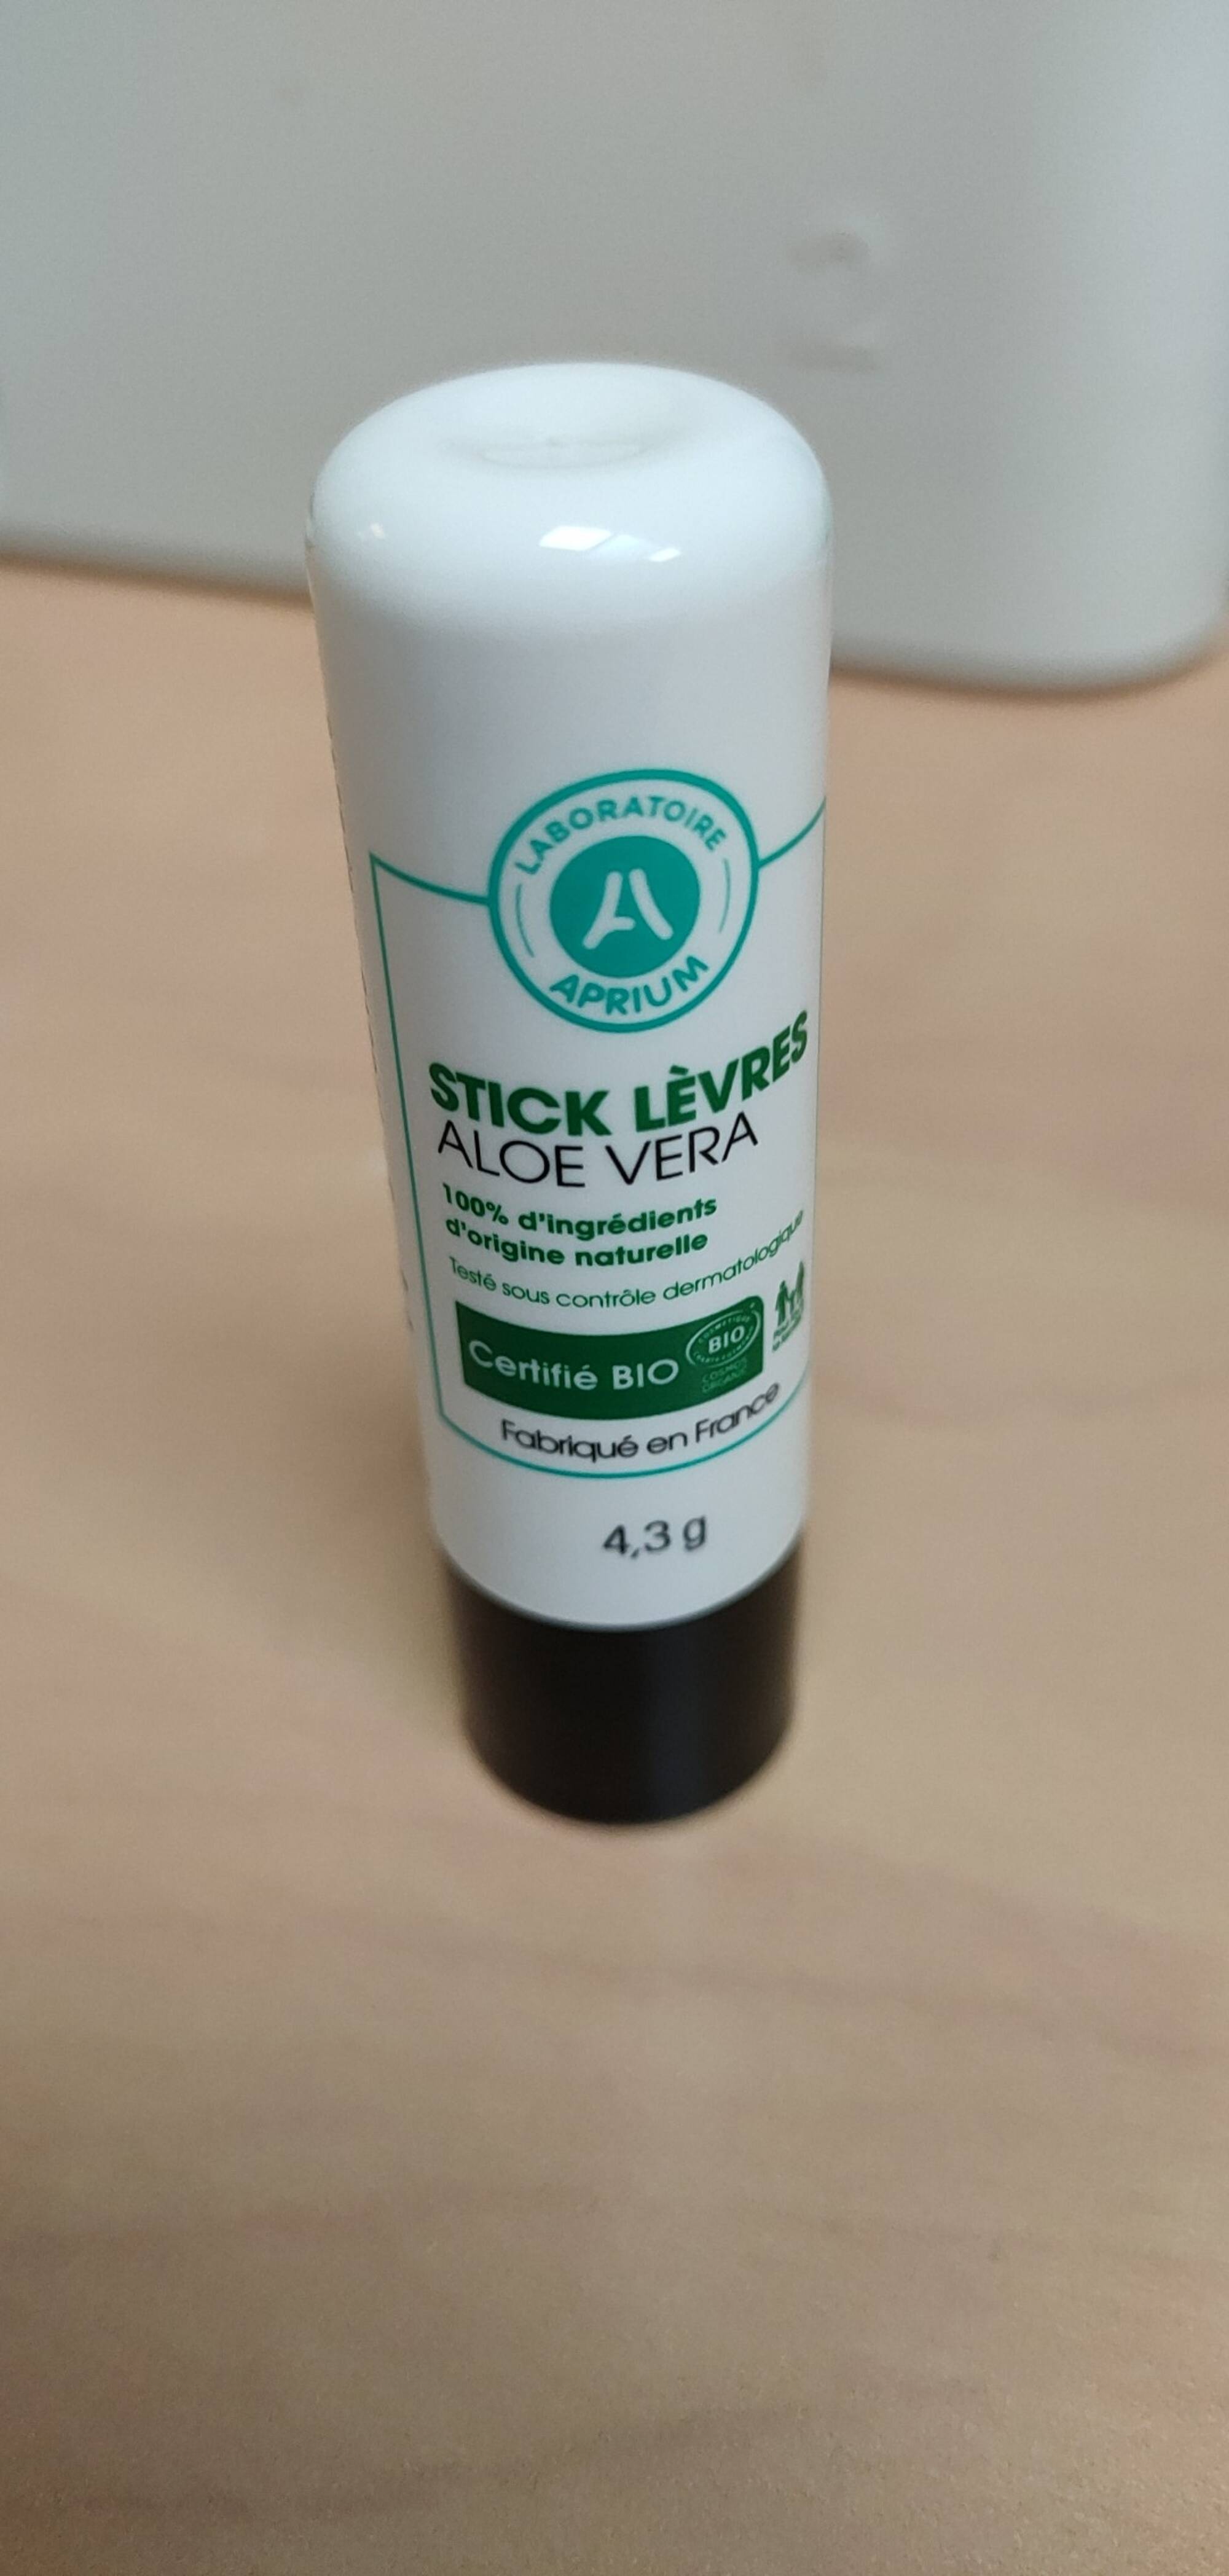 APRIUM - Stick lèvres à l'aloe vera